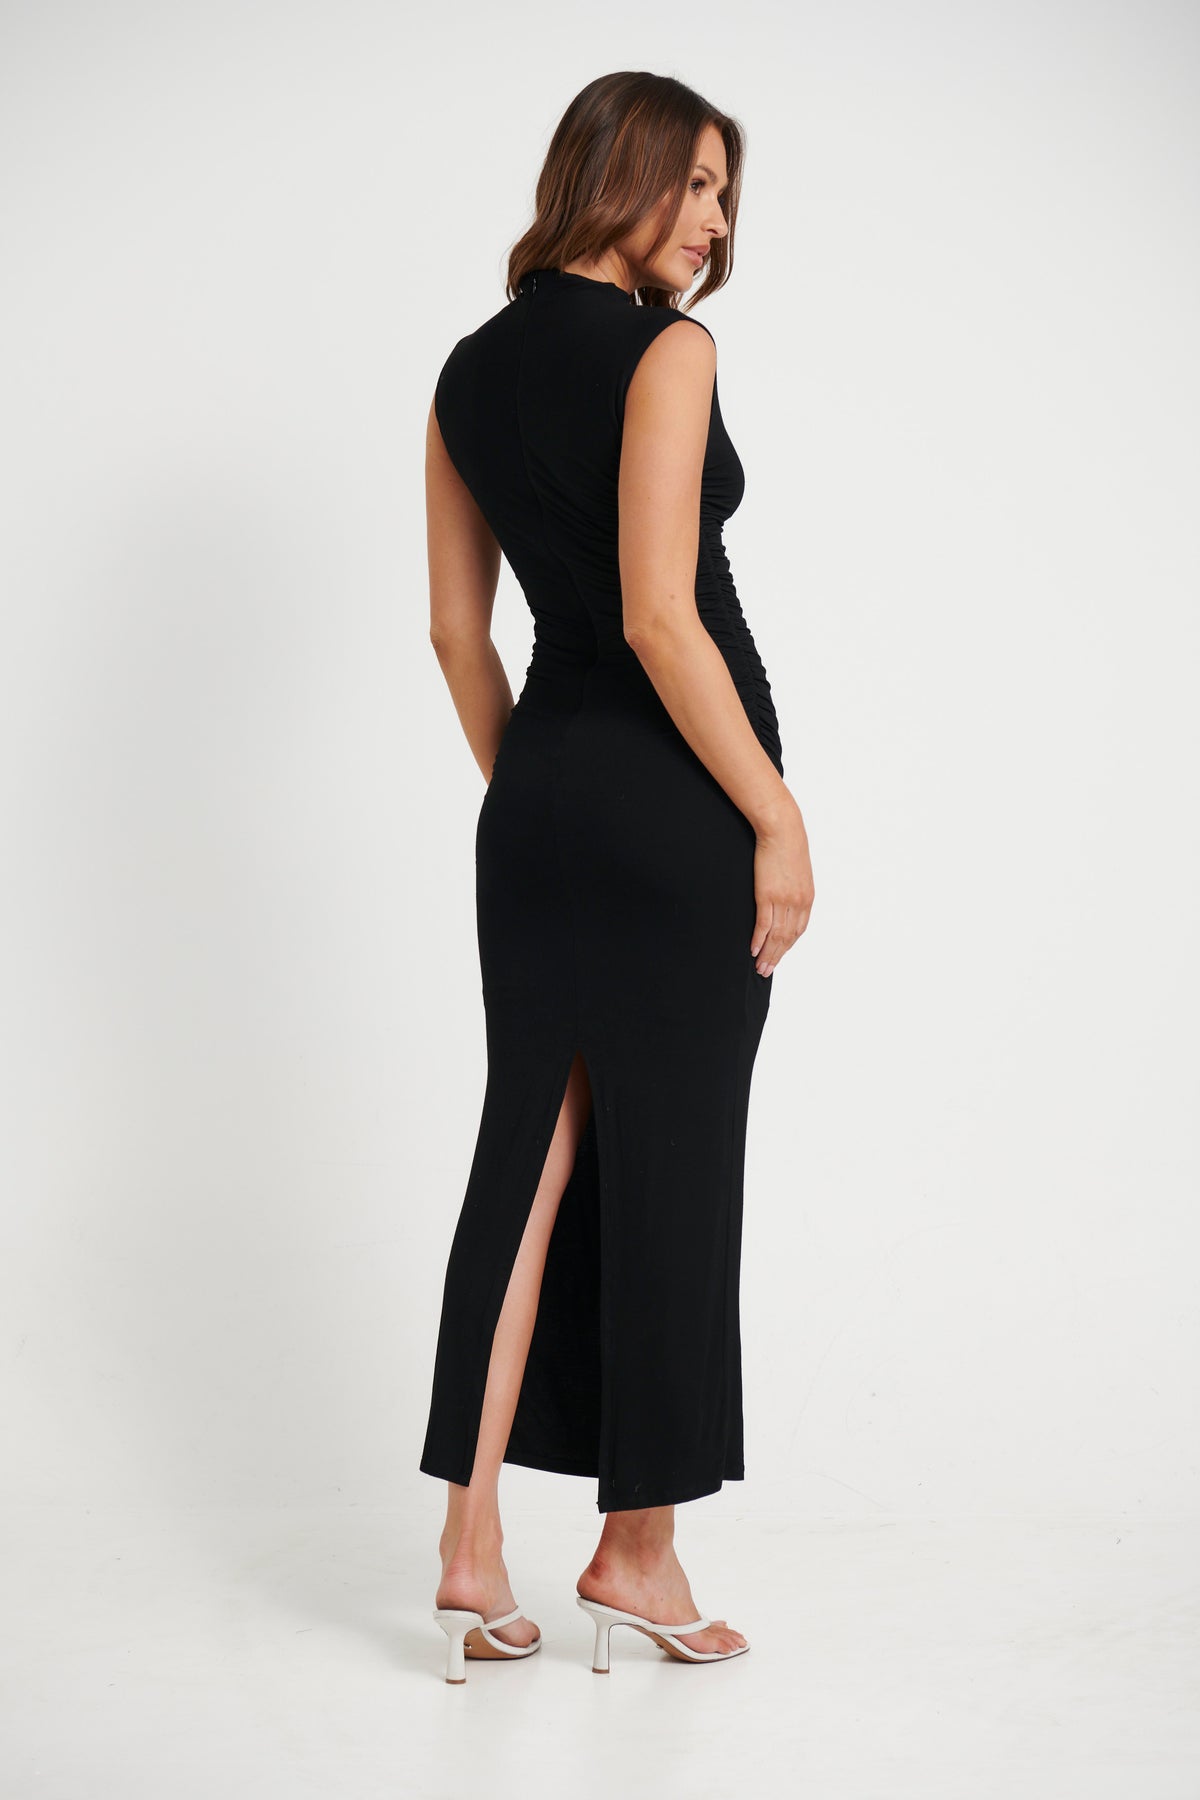 Zara Maxi Dress Black